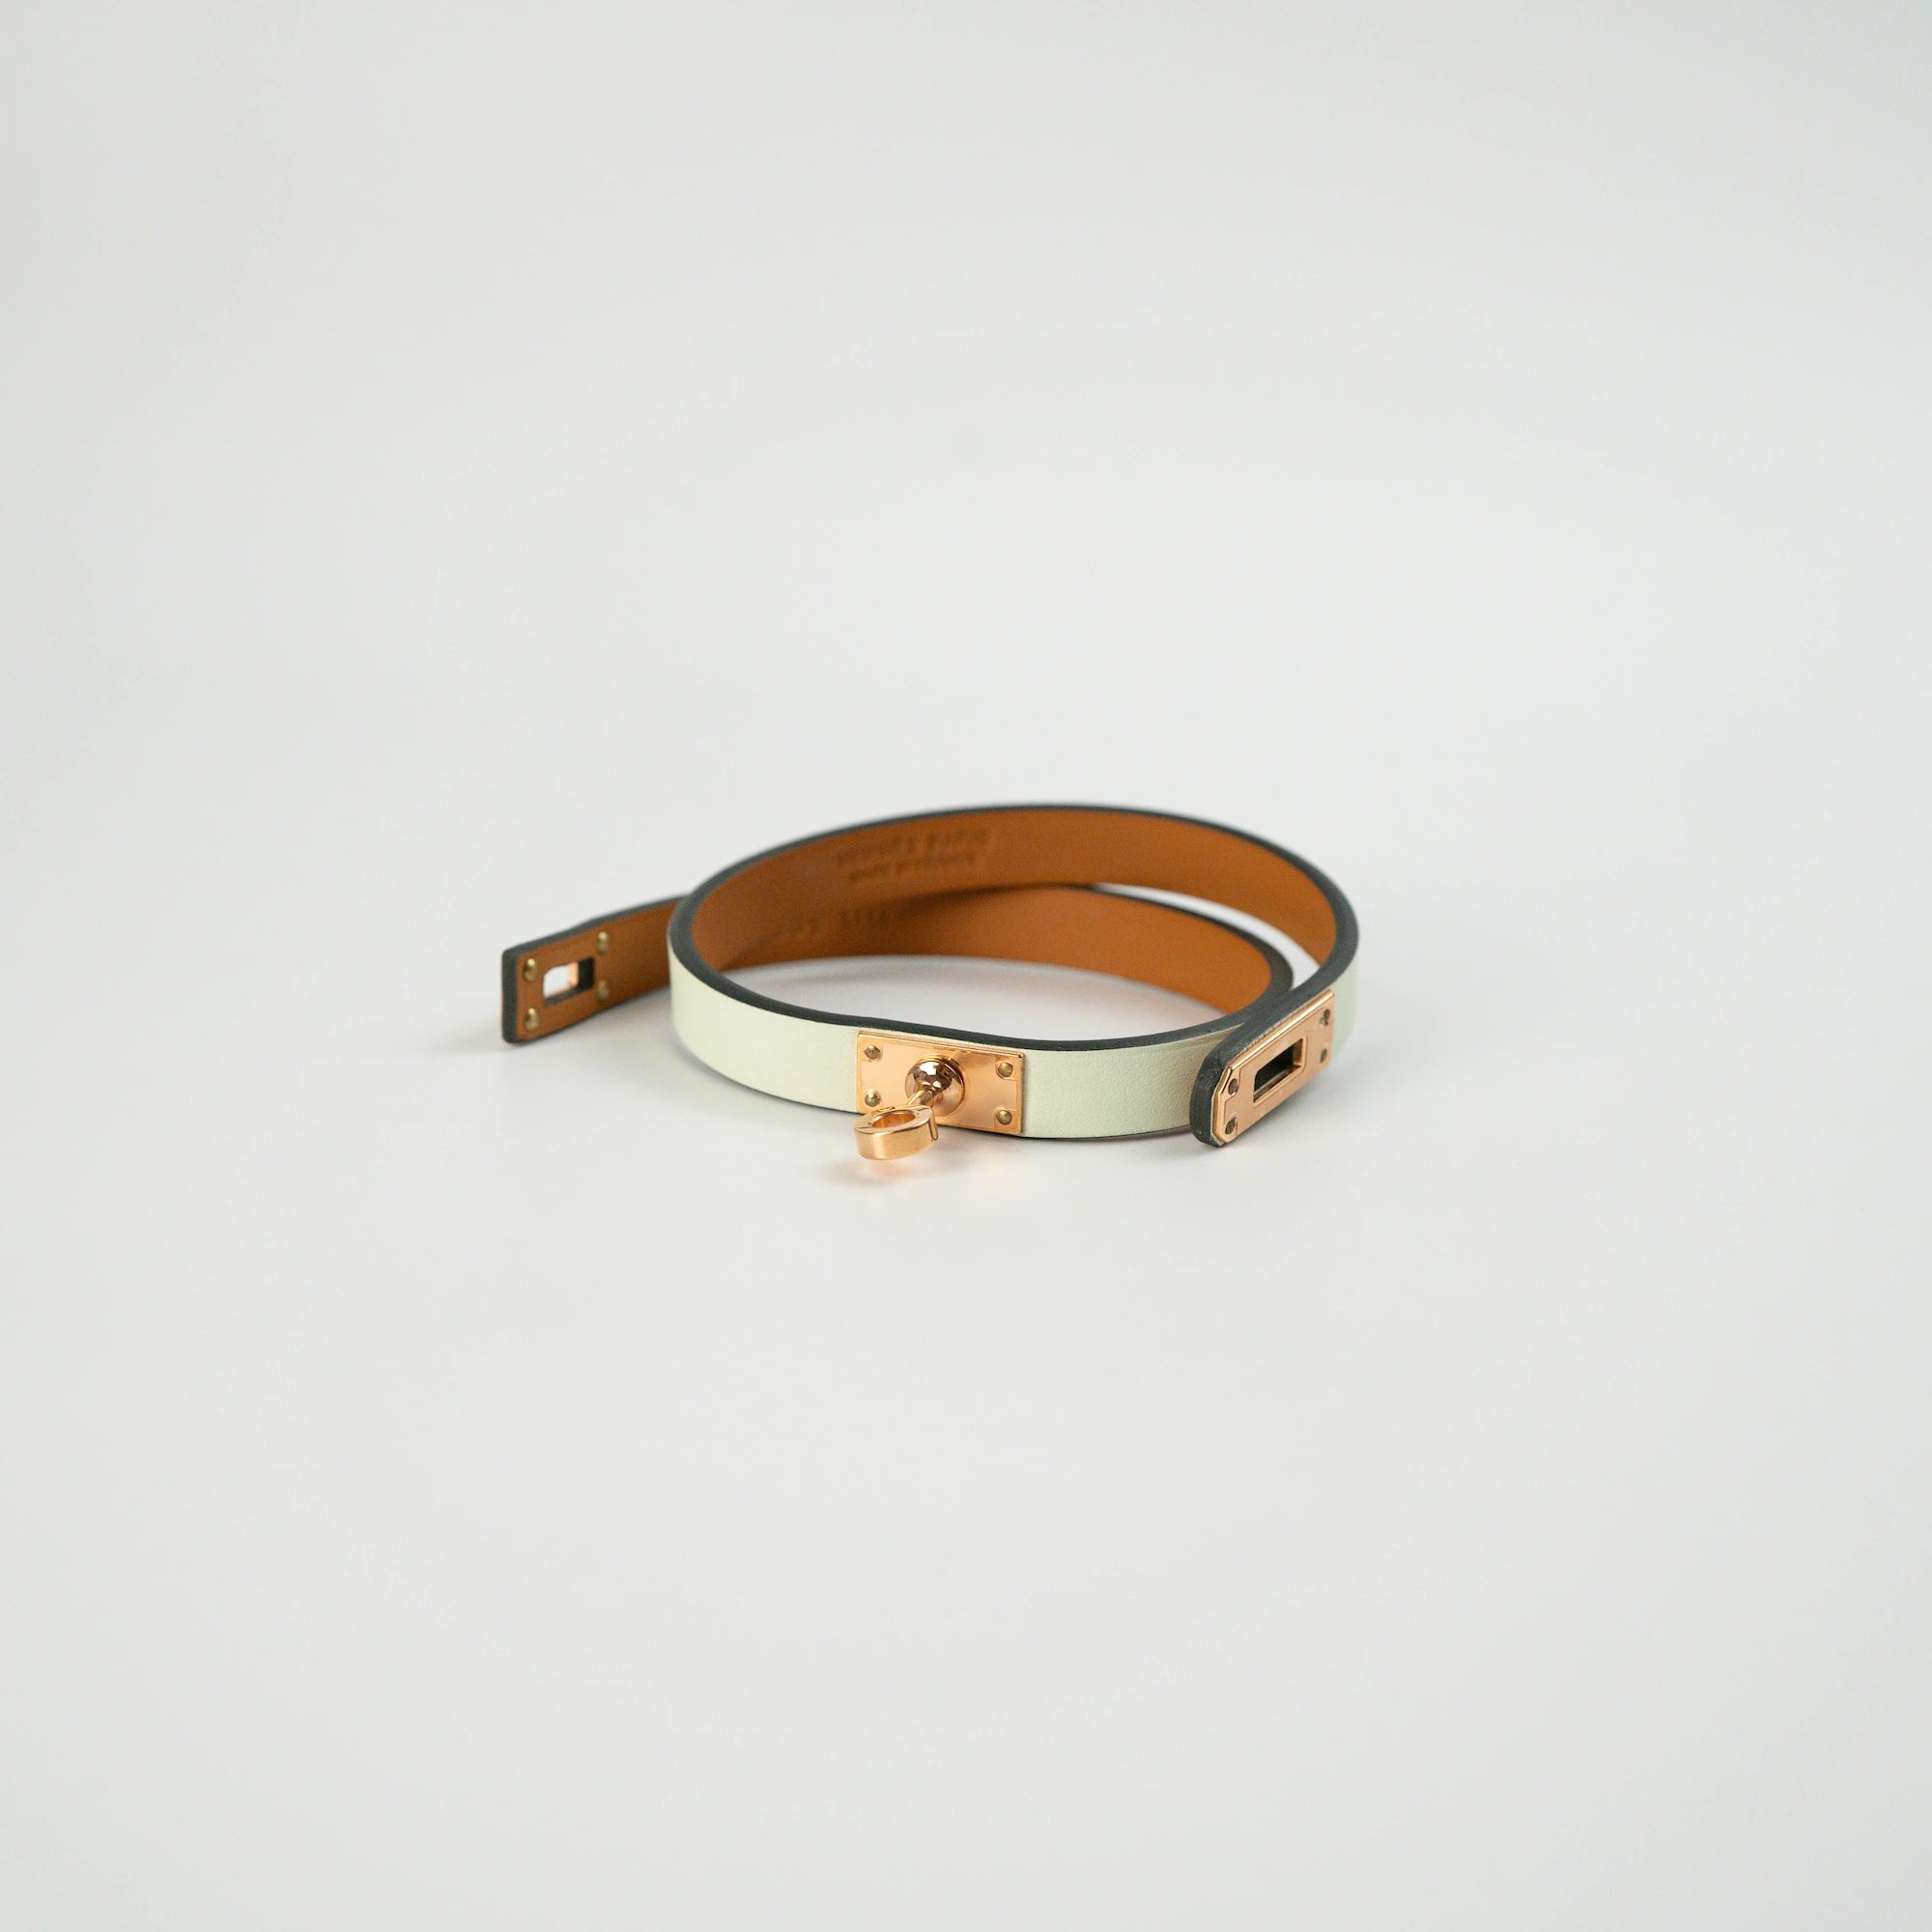 Produktfotografie des geöffneten Türkises Leder-Armband "Mini Kelly Double Tour" von Hermès mit rosegoldenem Verschluss